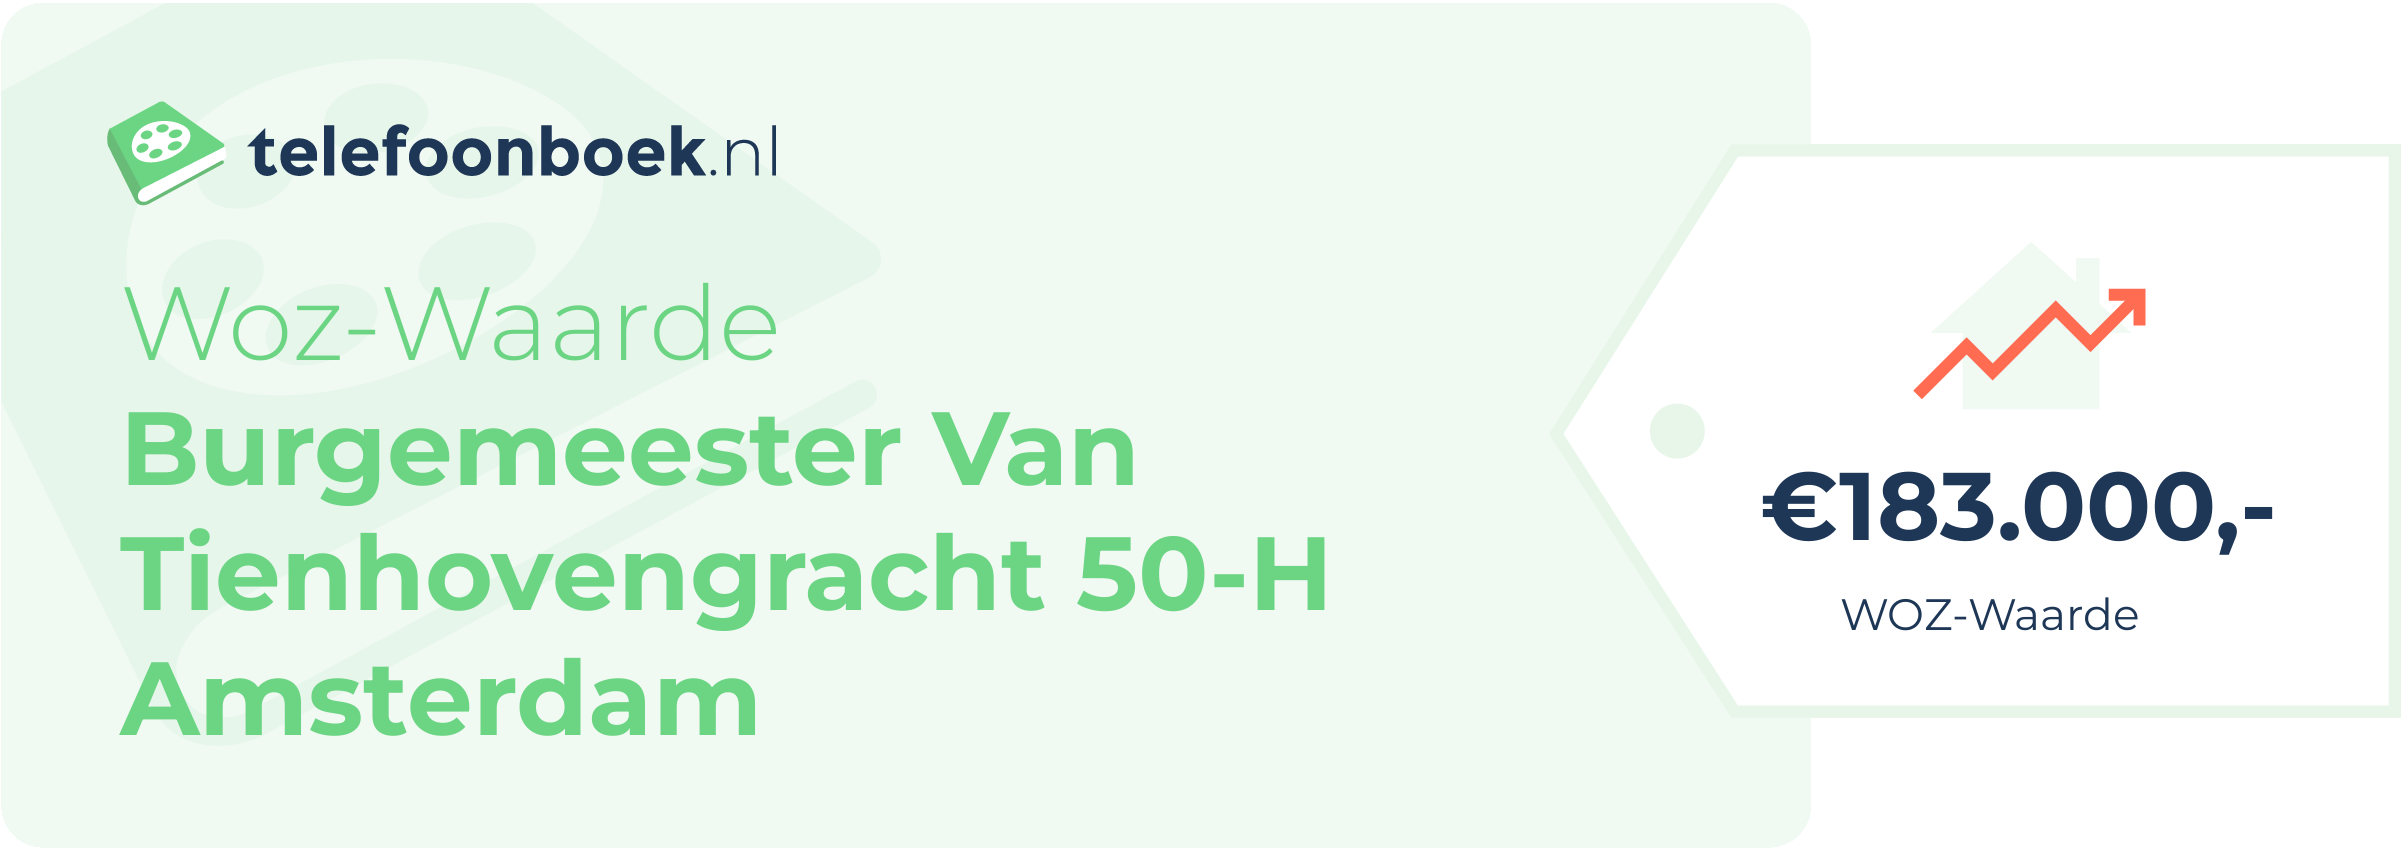 WOZ-waarde Burgemeester Van Tienhovengracht 50-H Amsterdam